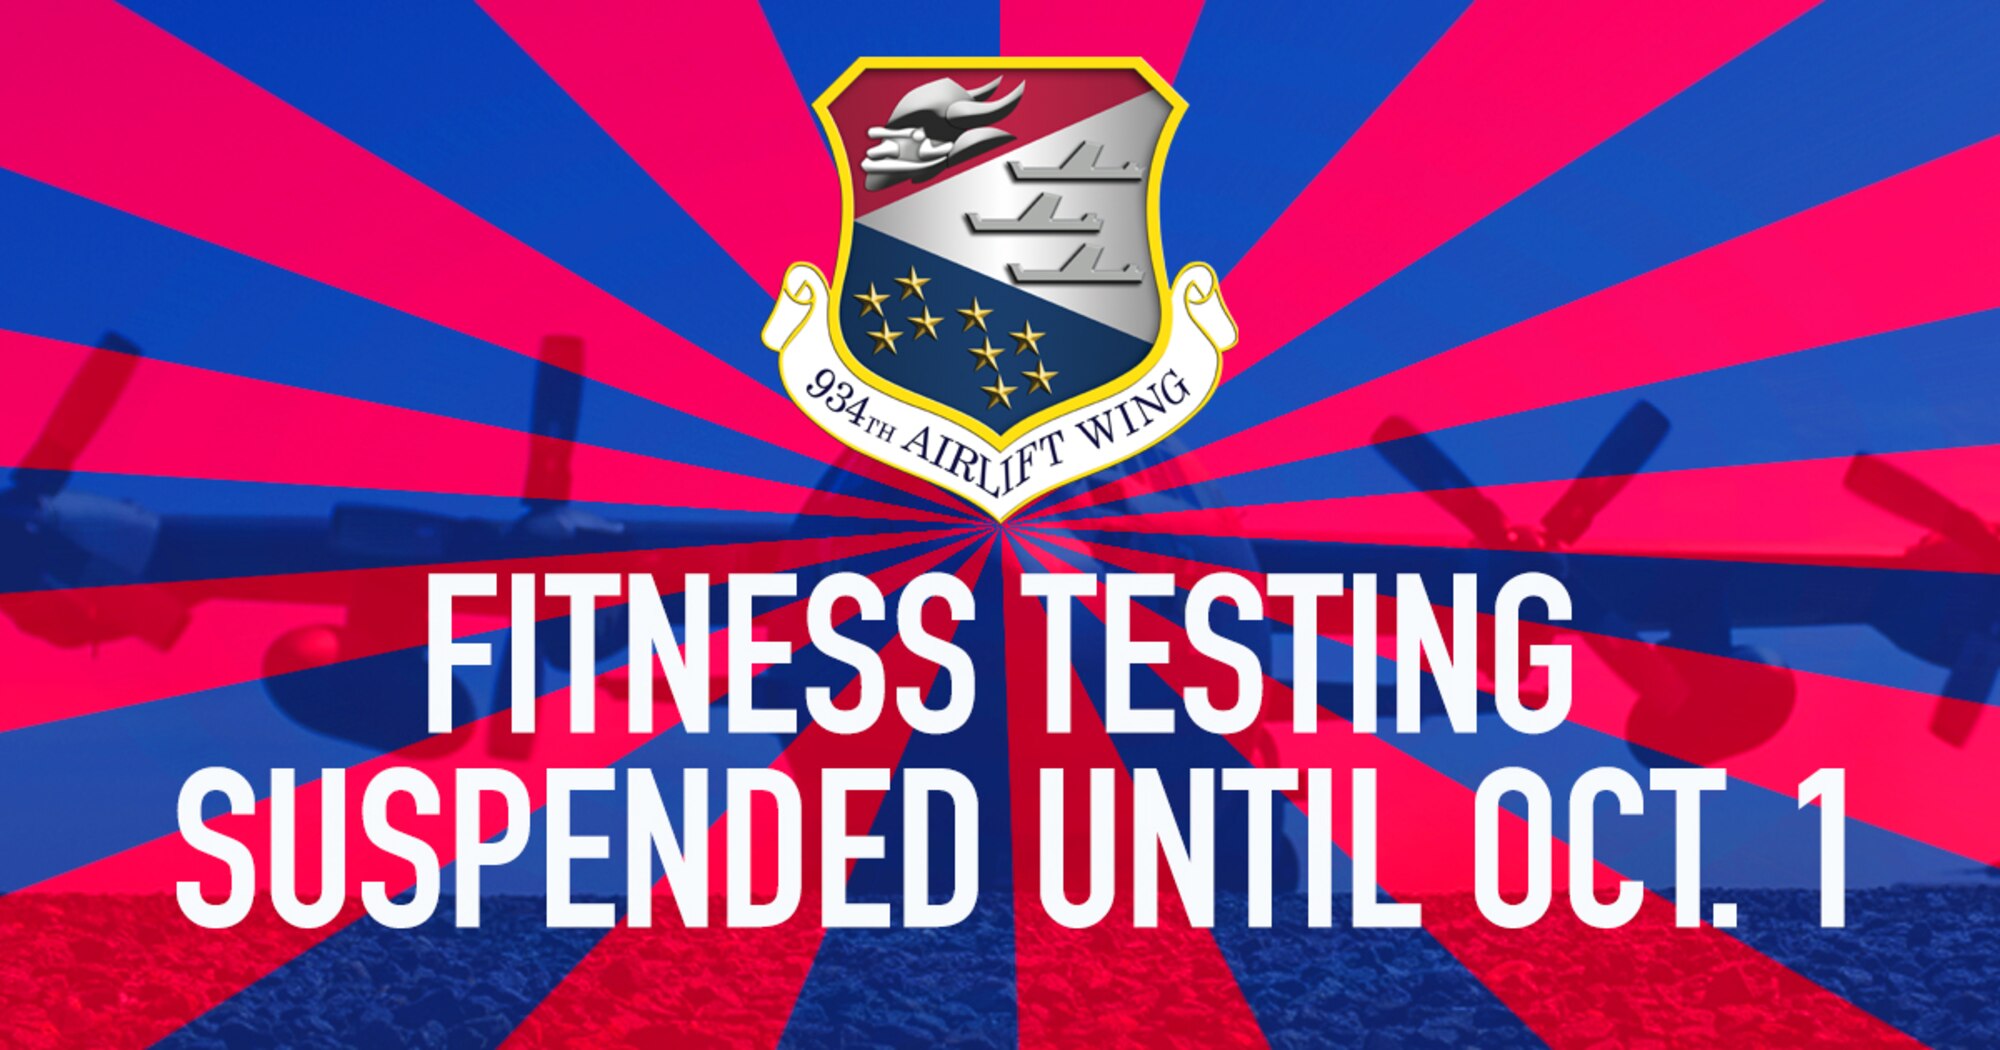 Fitness Test Suspend